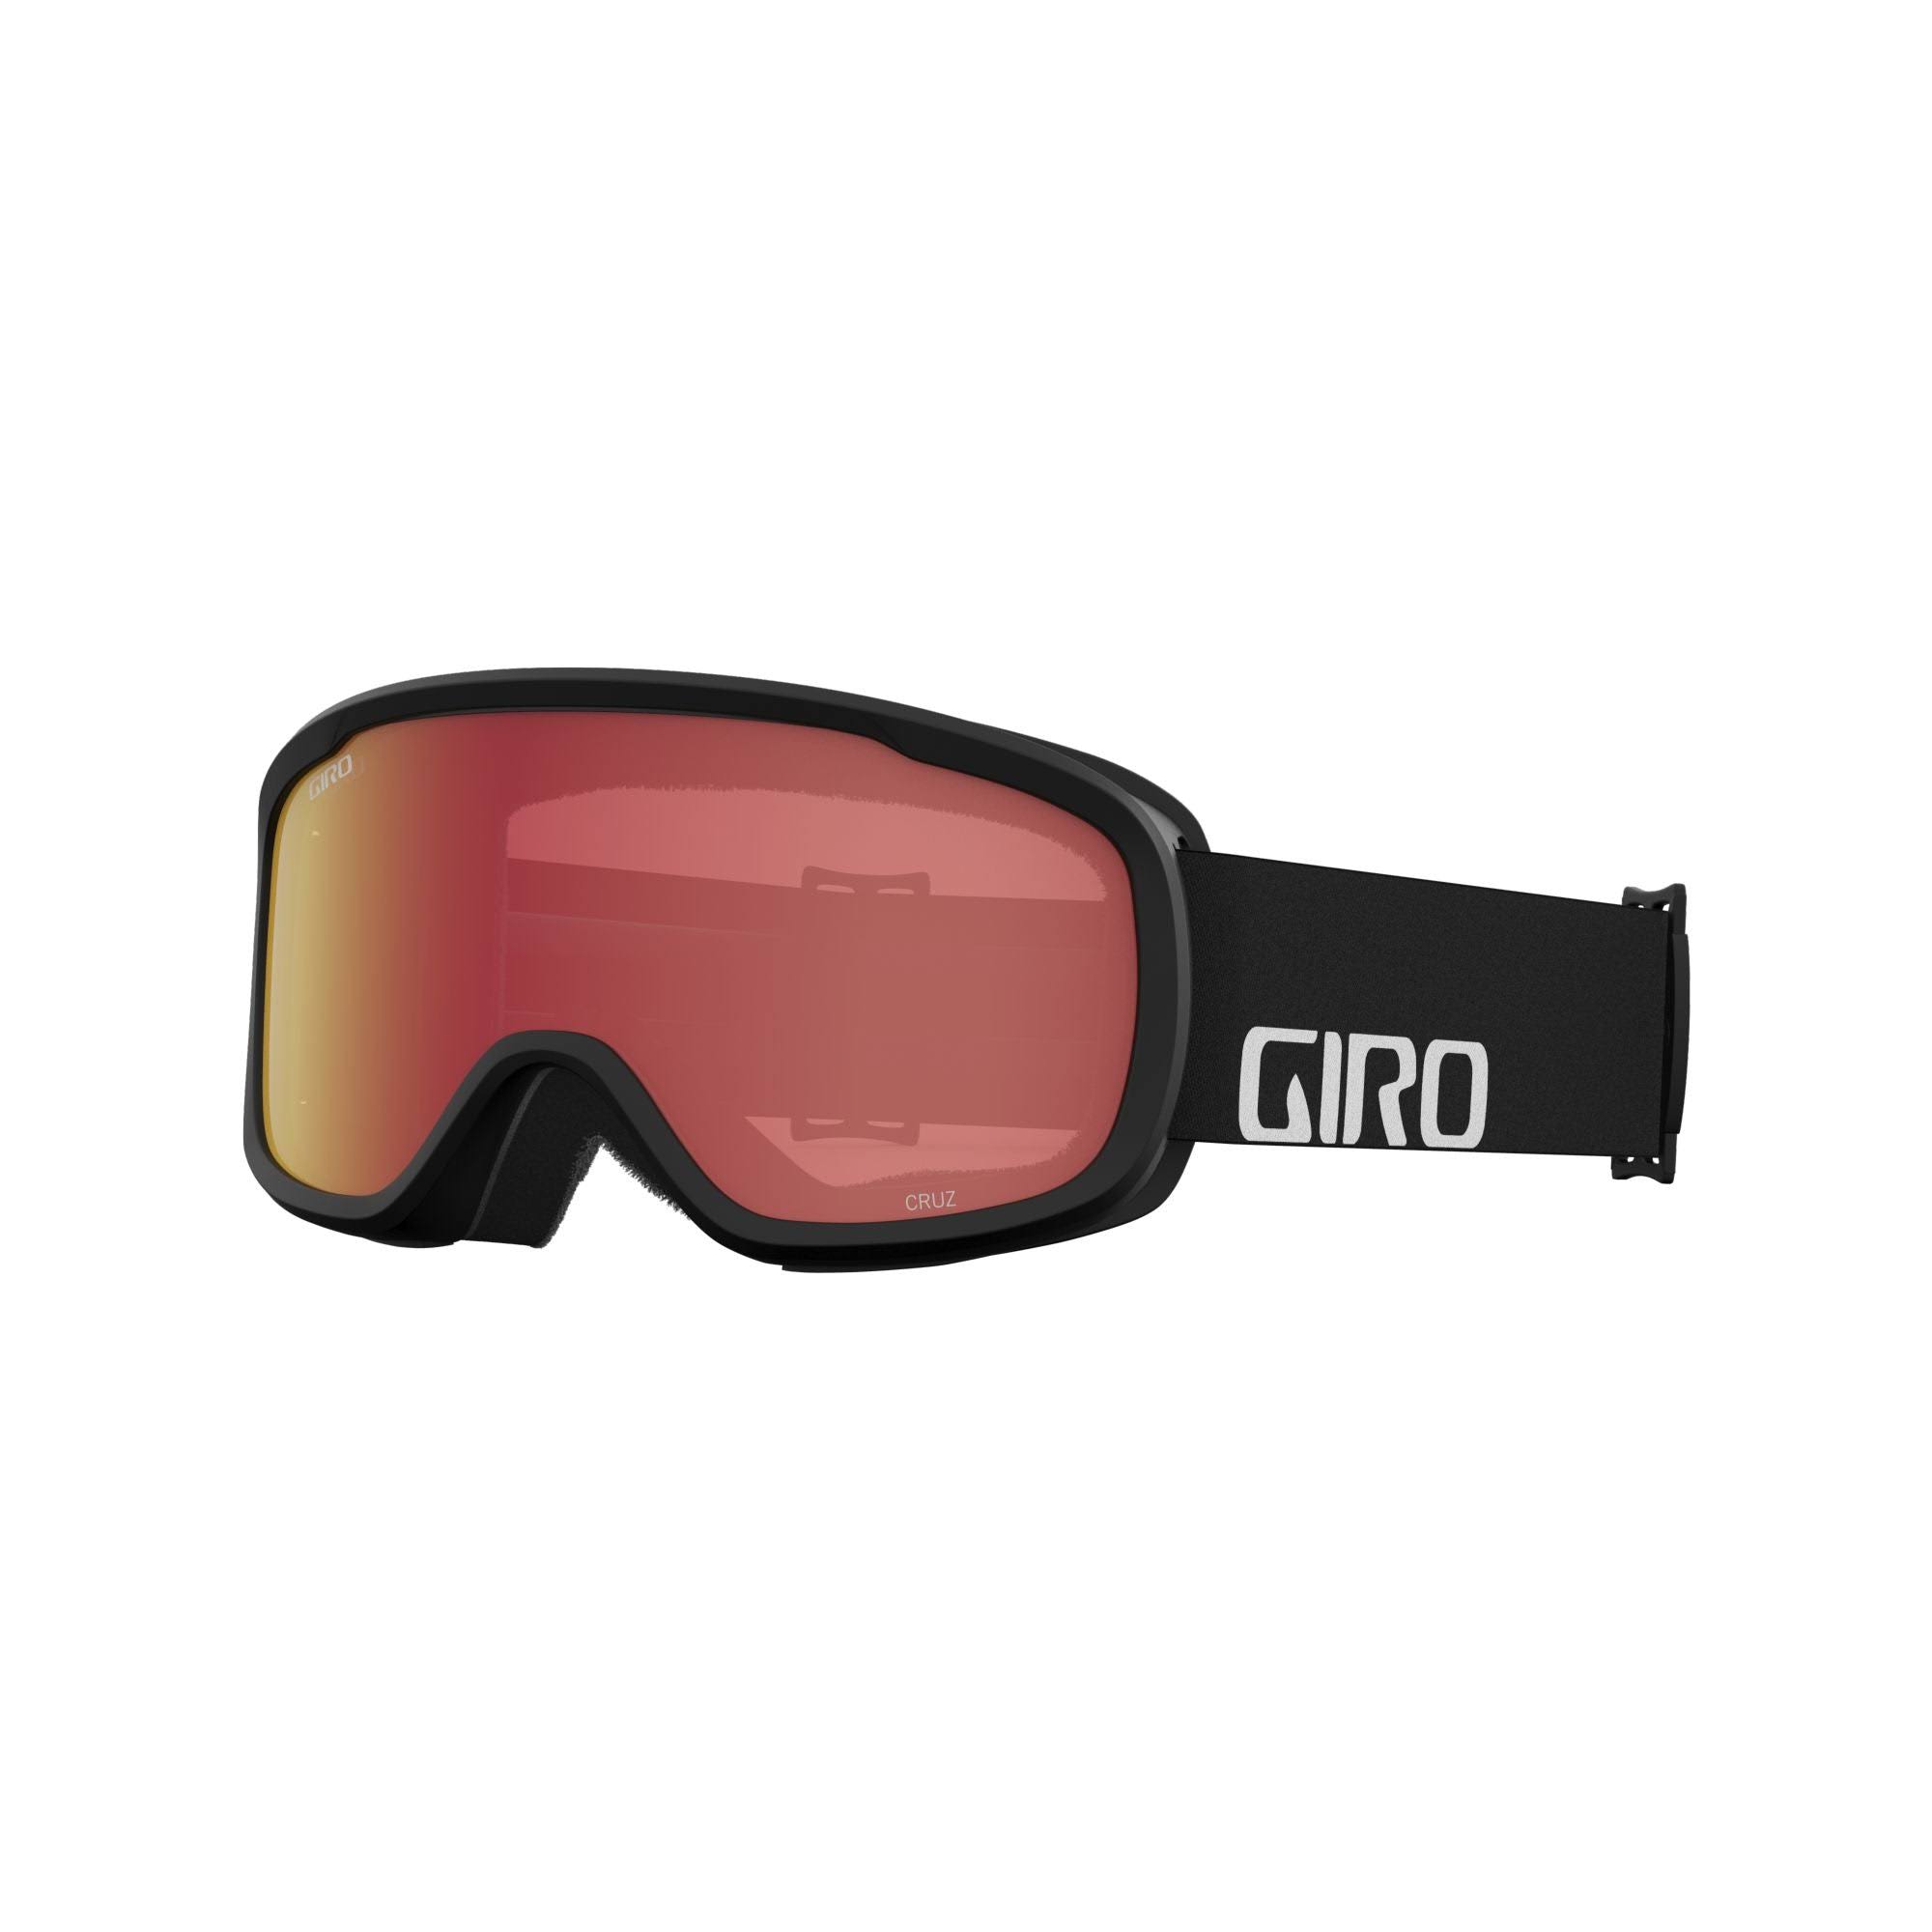 Giro Cruz Goggle Black